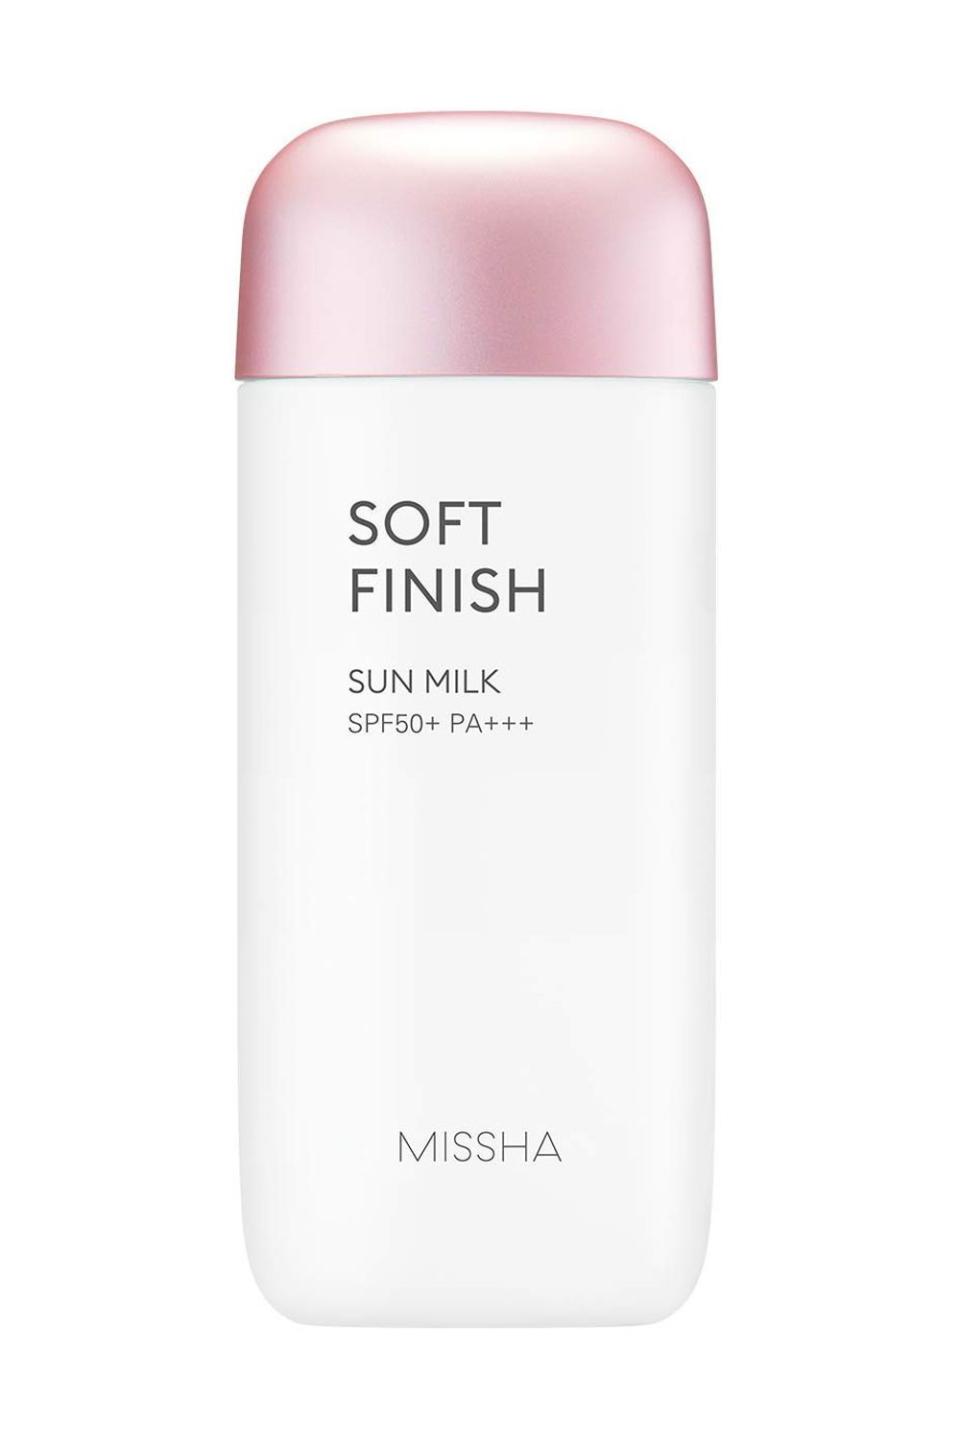 14) Missha All Around Safe Block Soft Finish Sun Milk